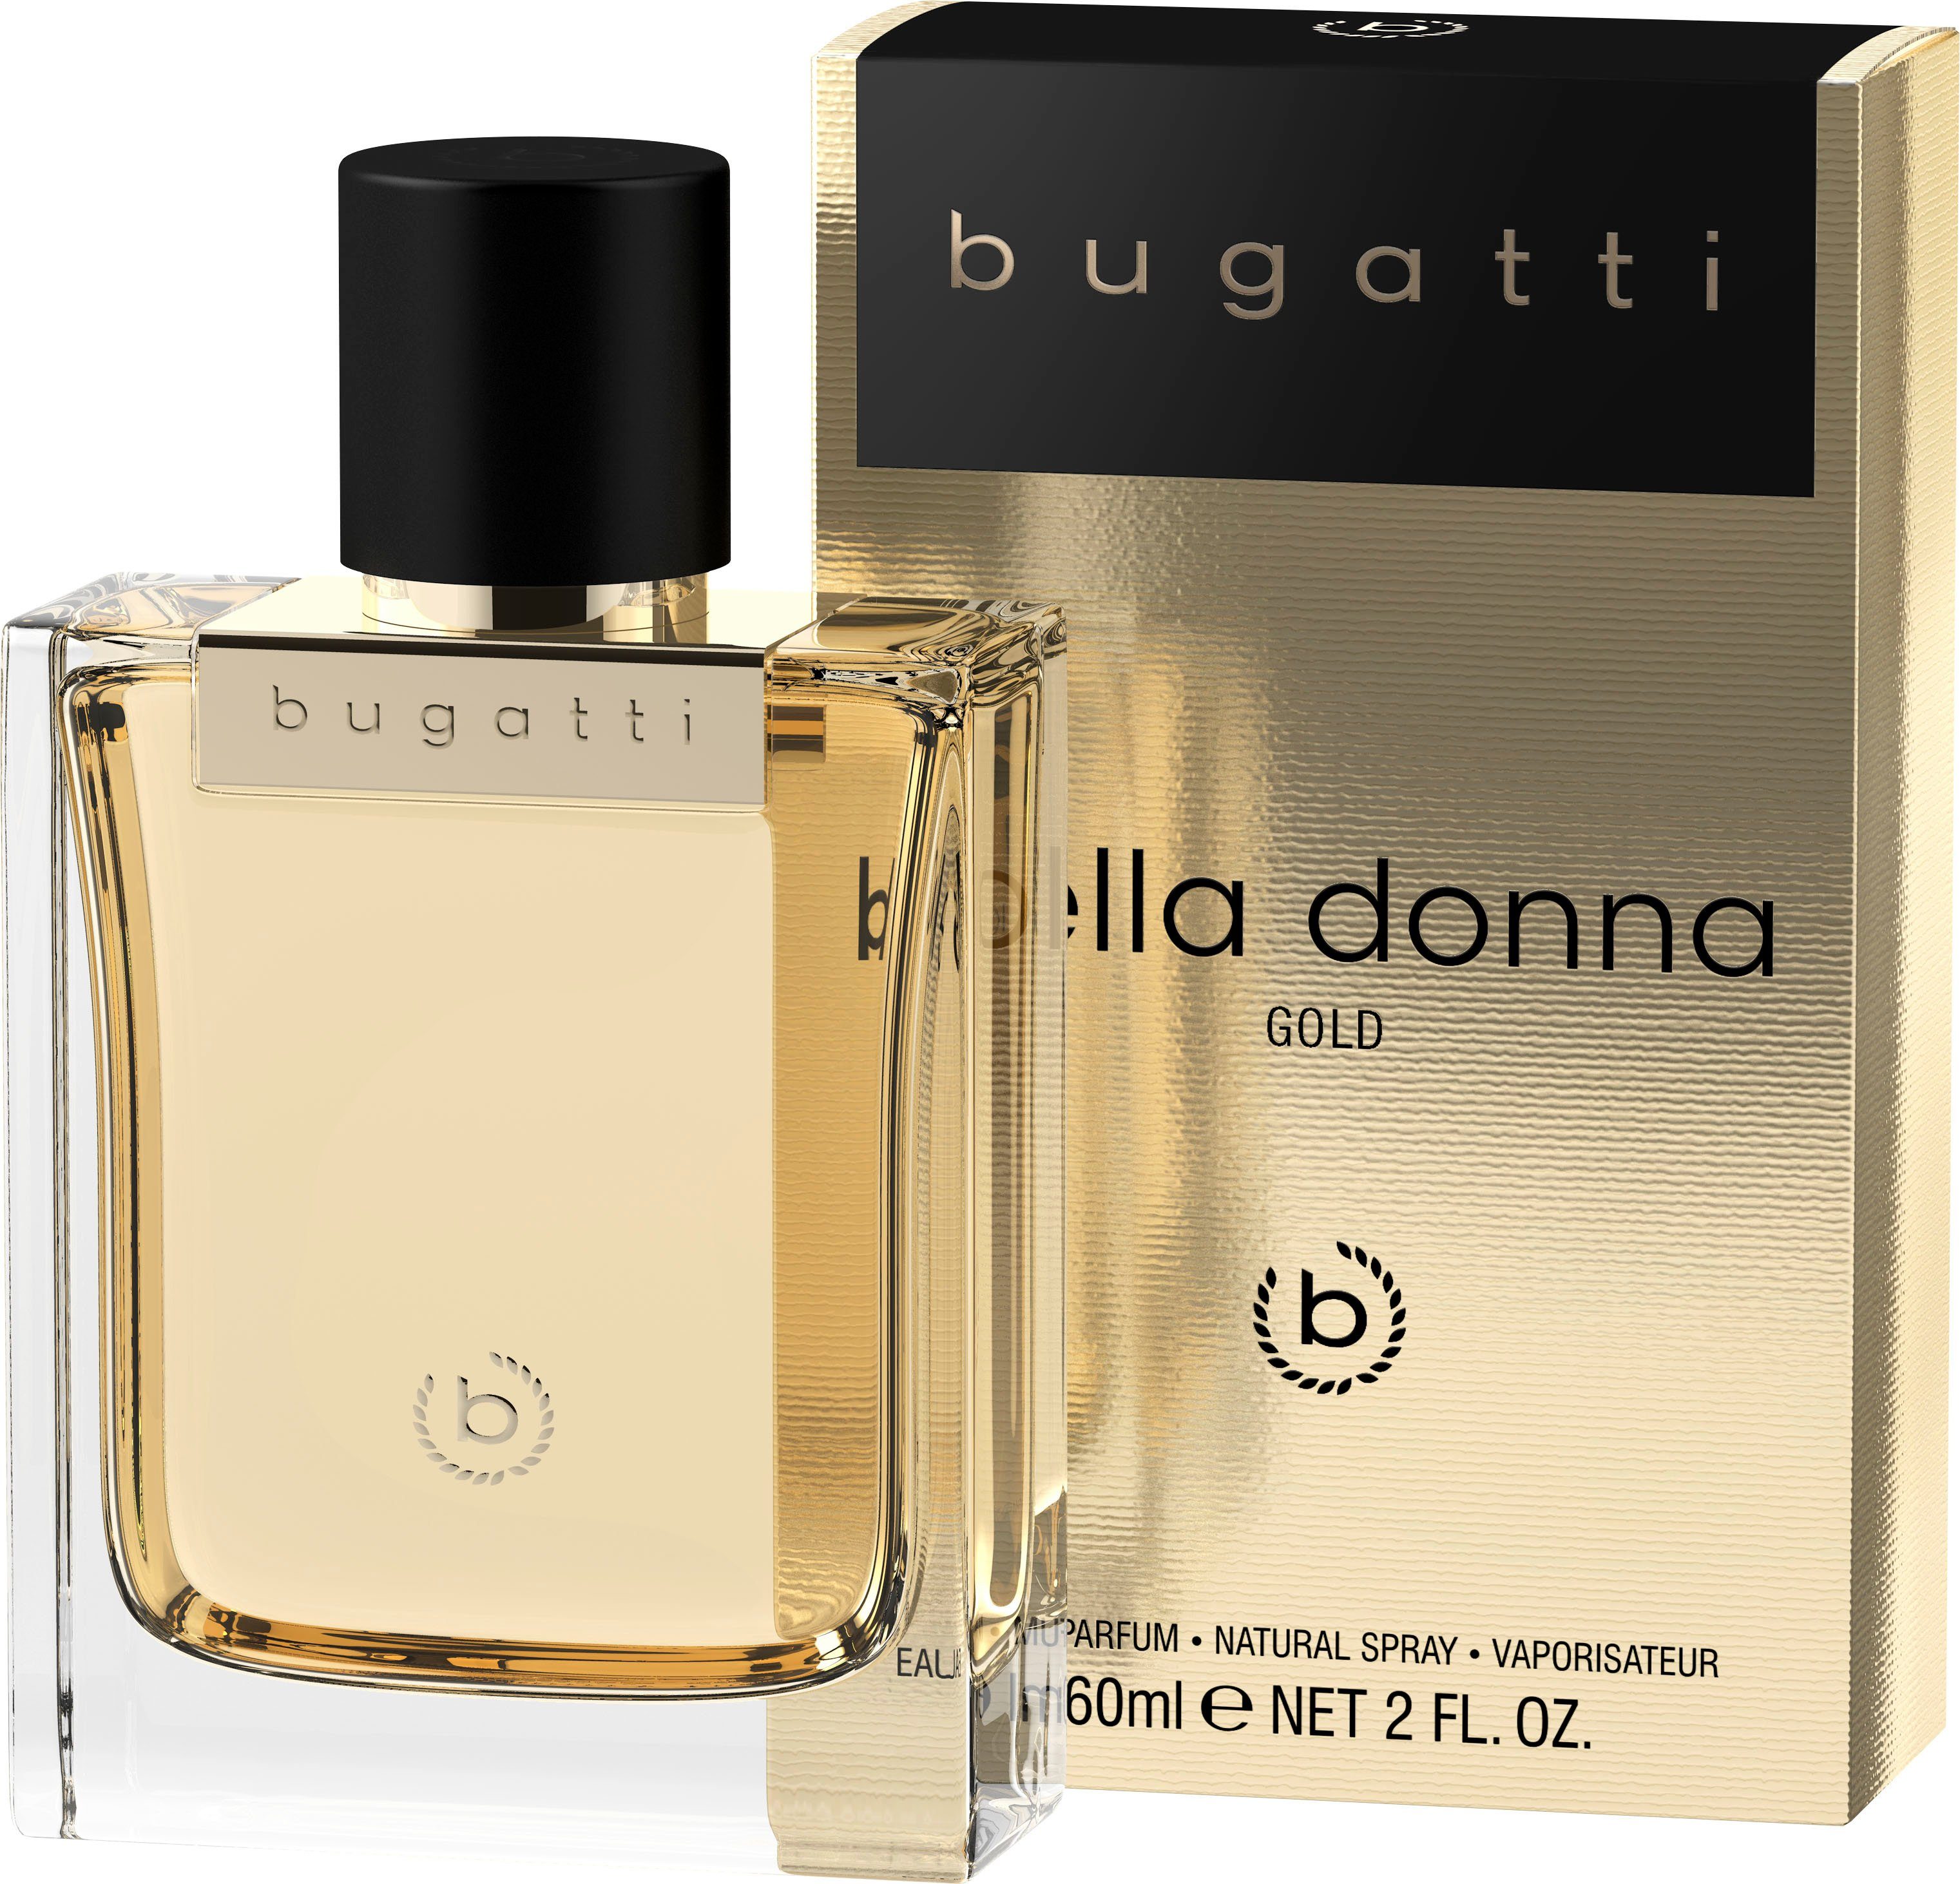 bugatti Eau de Parfum BUGATTI Bella Donna Gold EdP 60 ml | Eau de Parfum